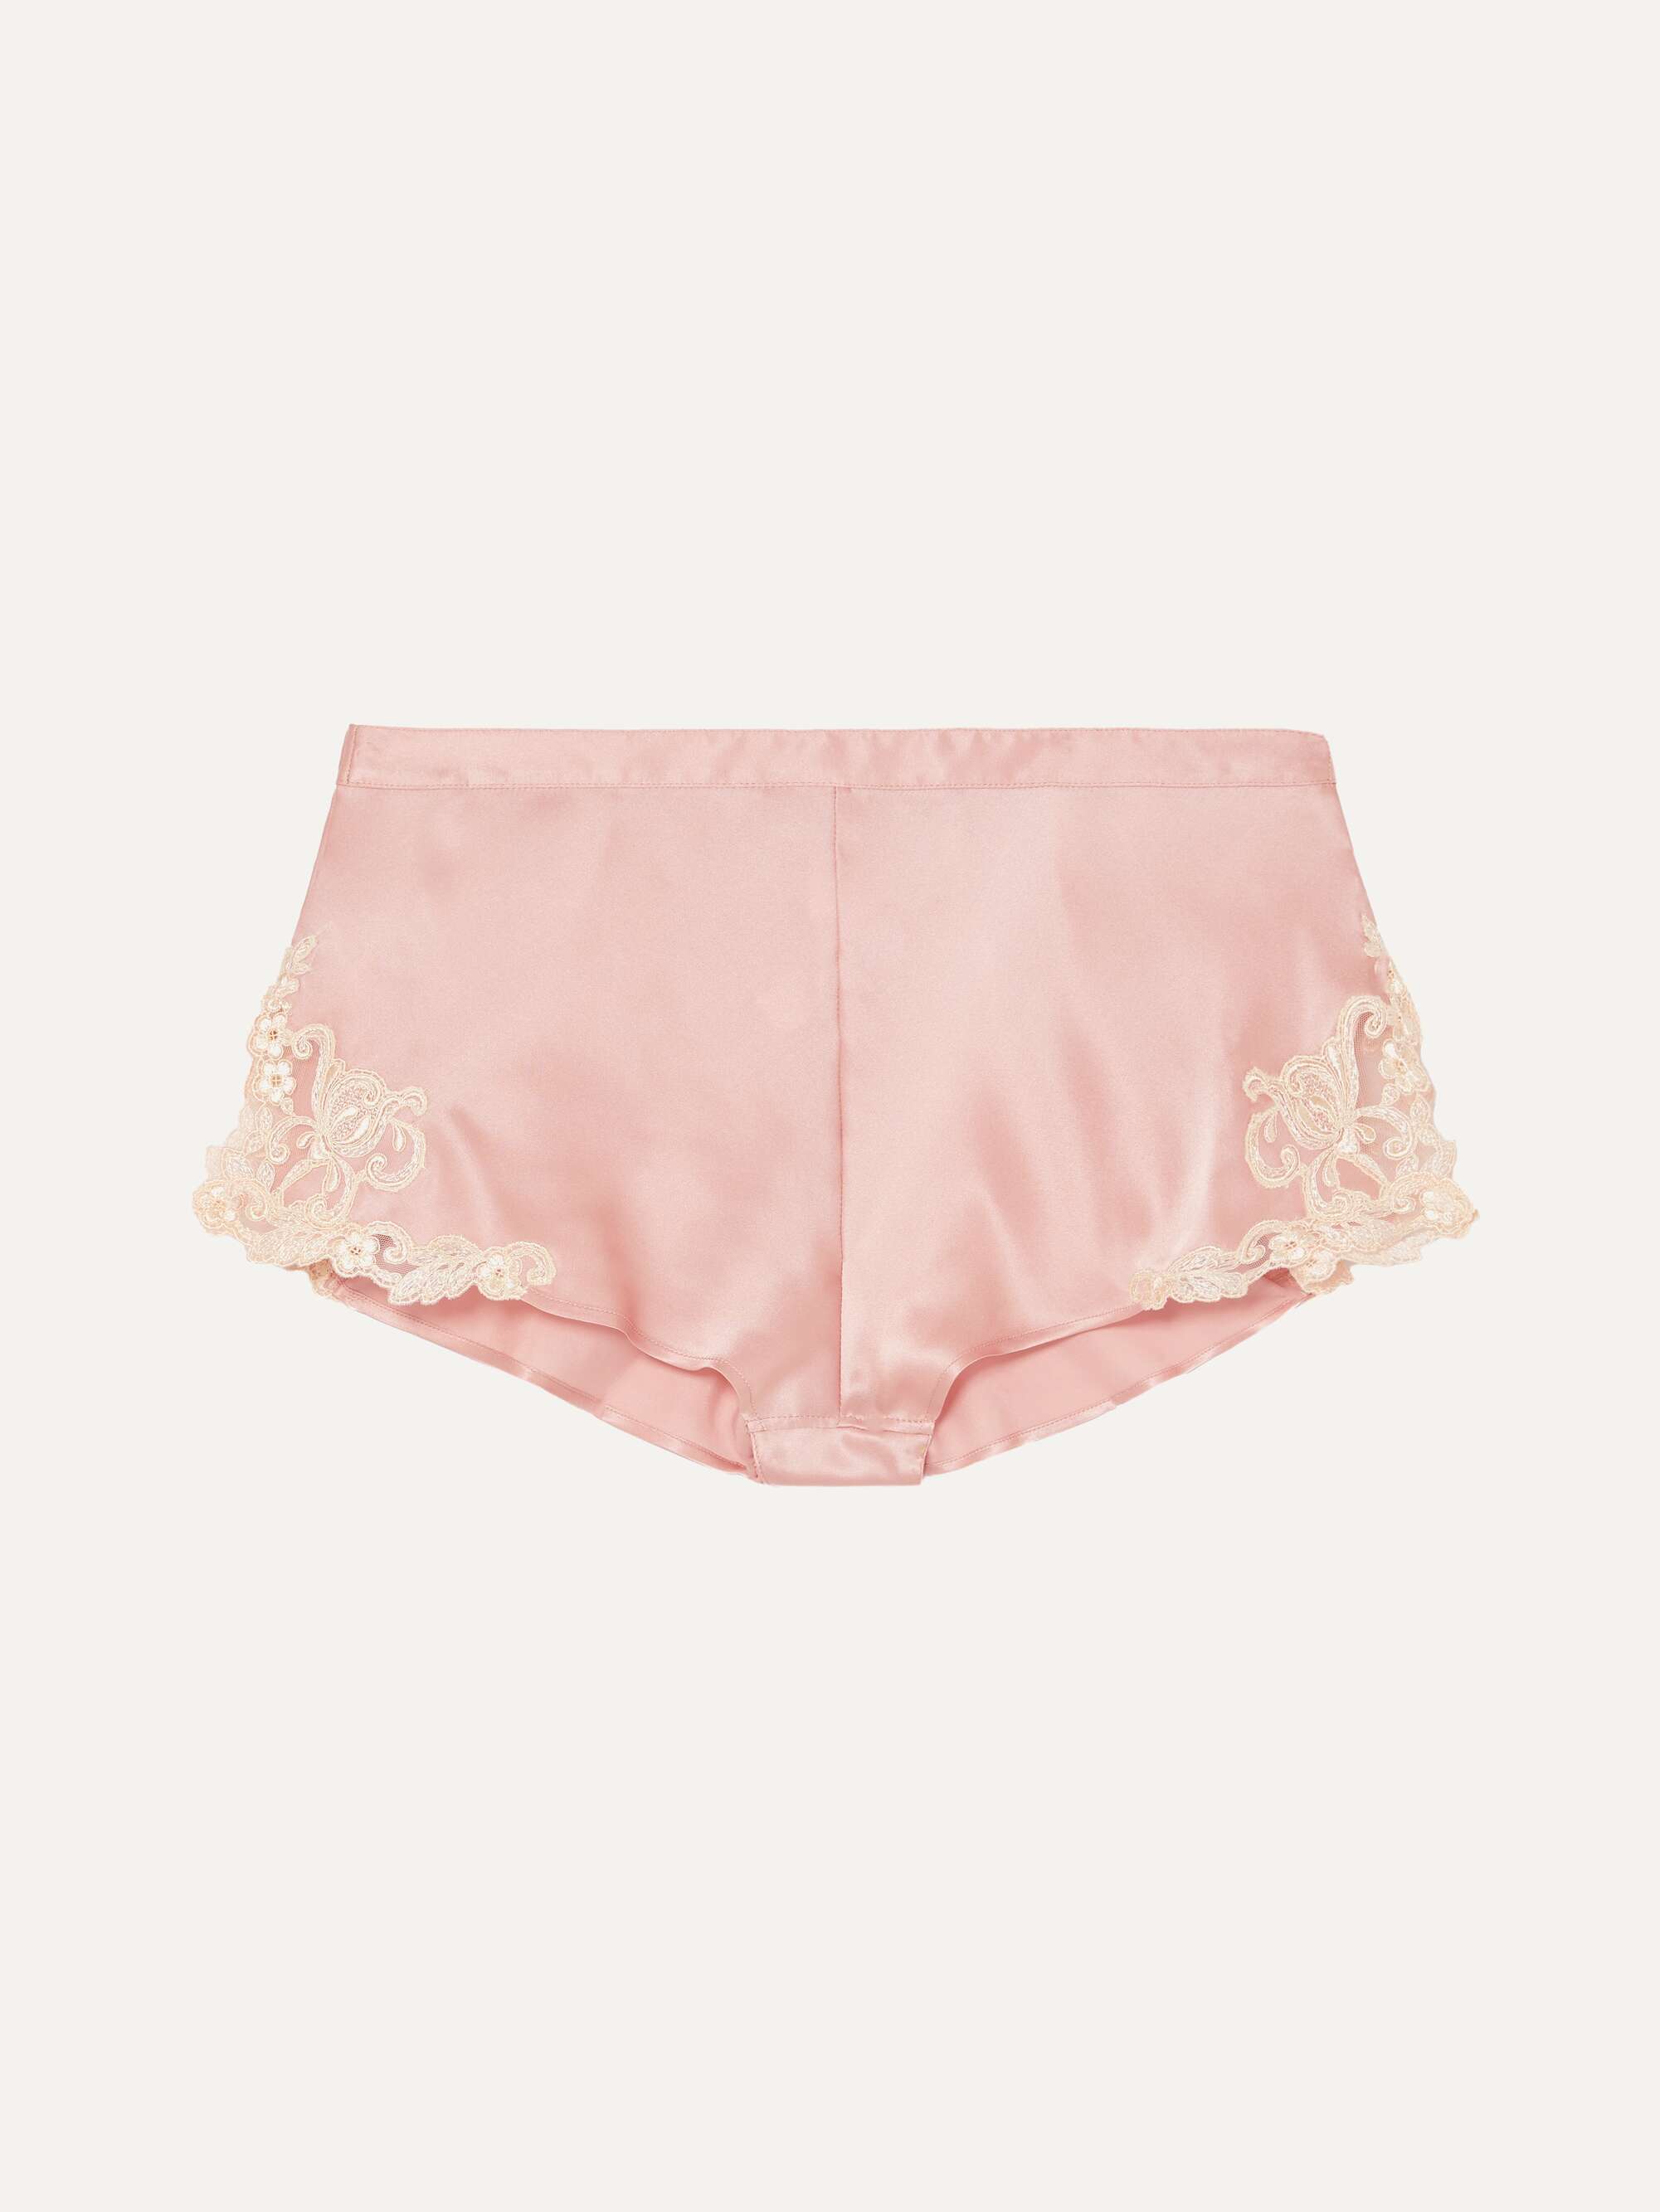 La Perla + Maison Embroidered Lace-Trimmed Silk-Blend Satin Shorts